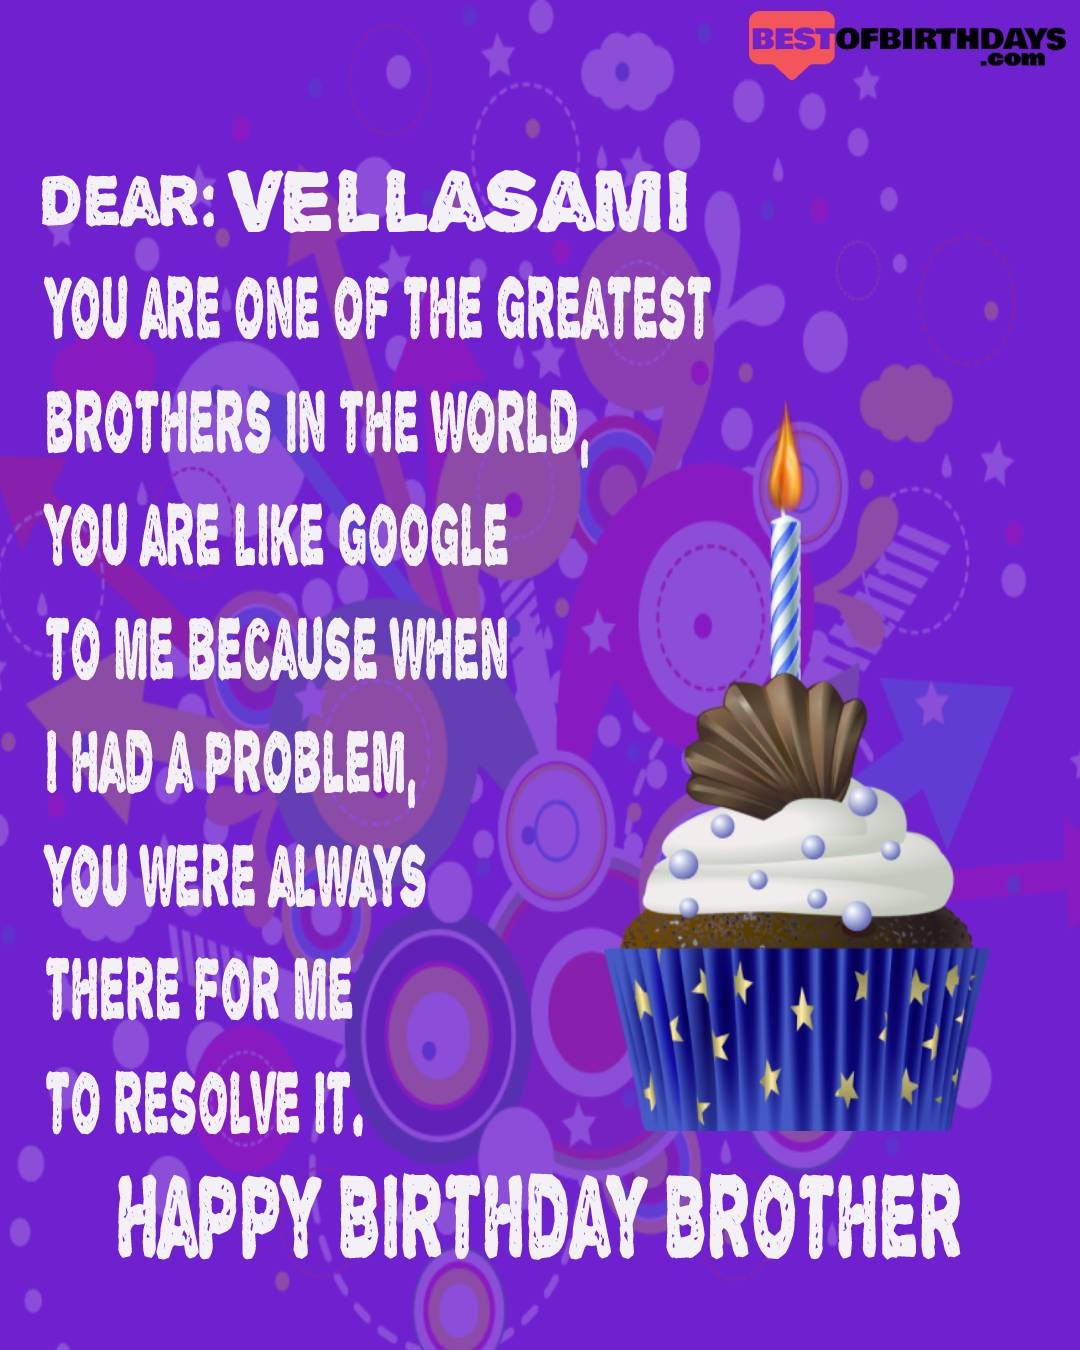 Happy birthday vellasami bhai brother bro